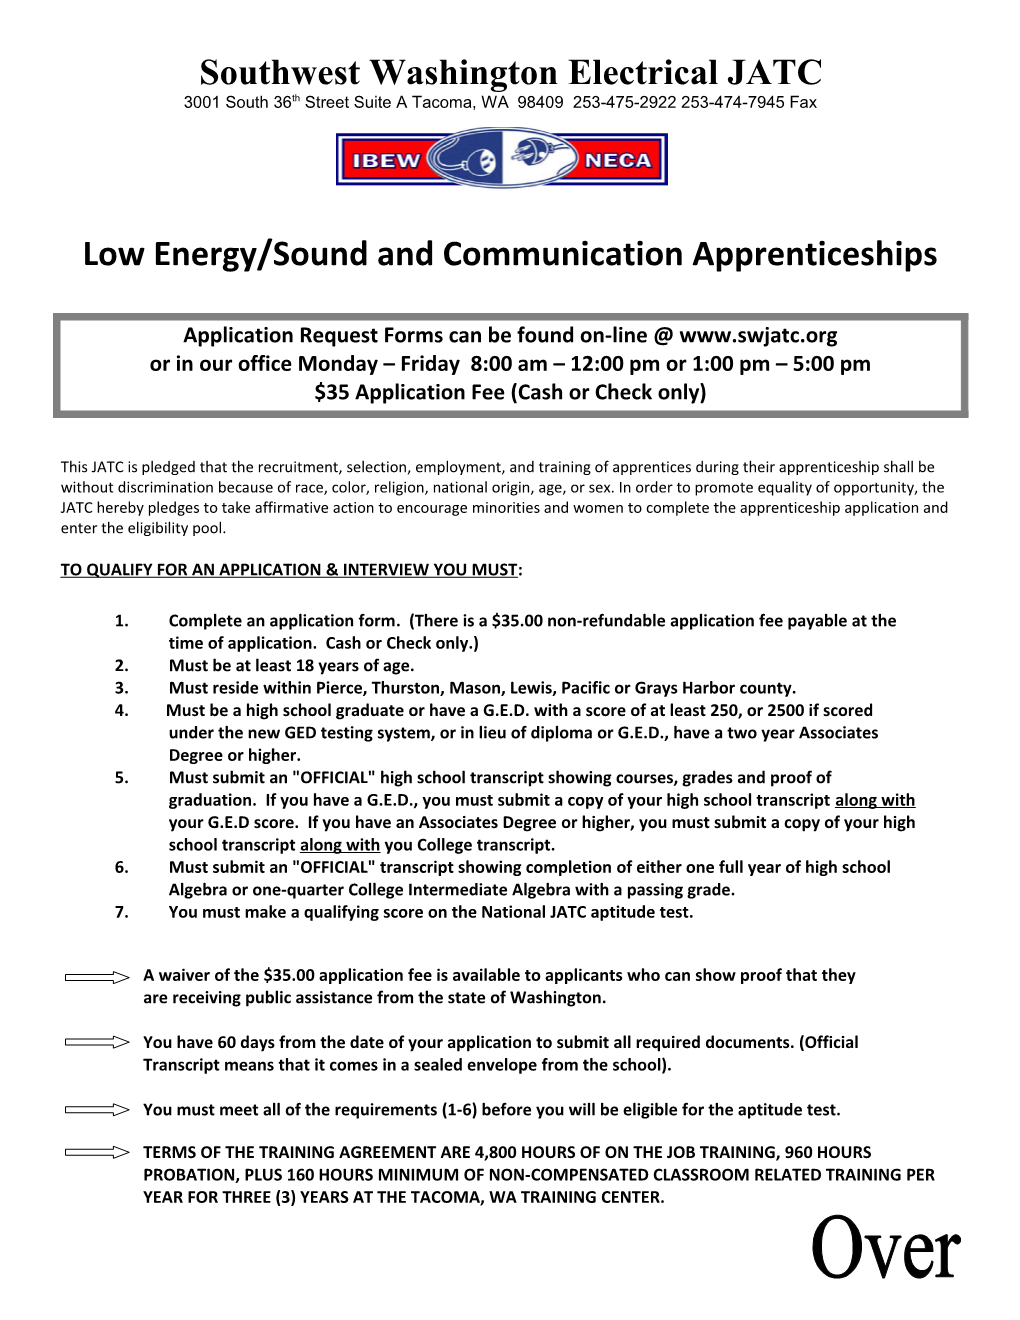 Low Energy/Sound & Communication 3 Year Program